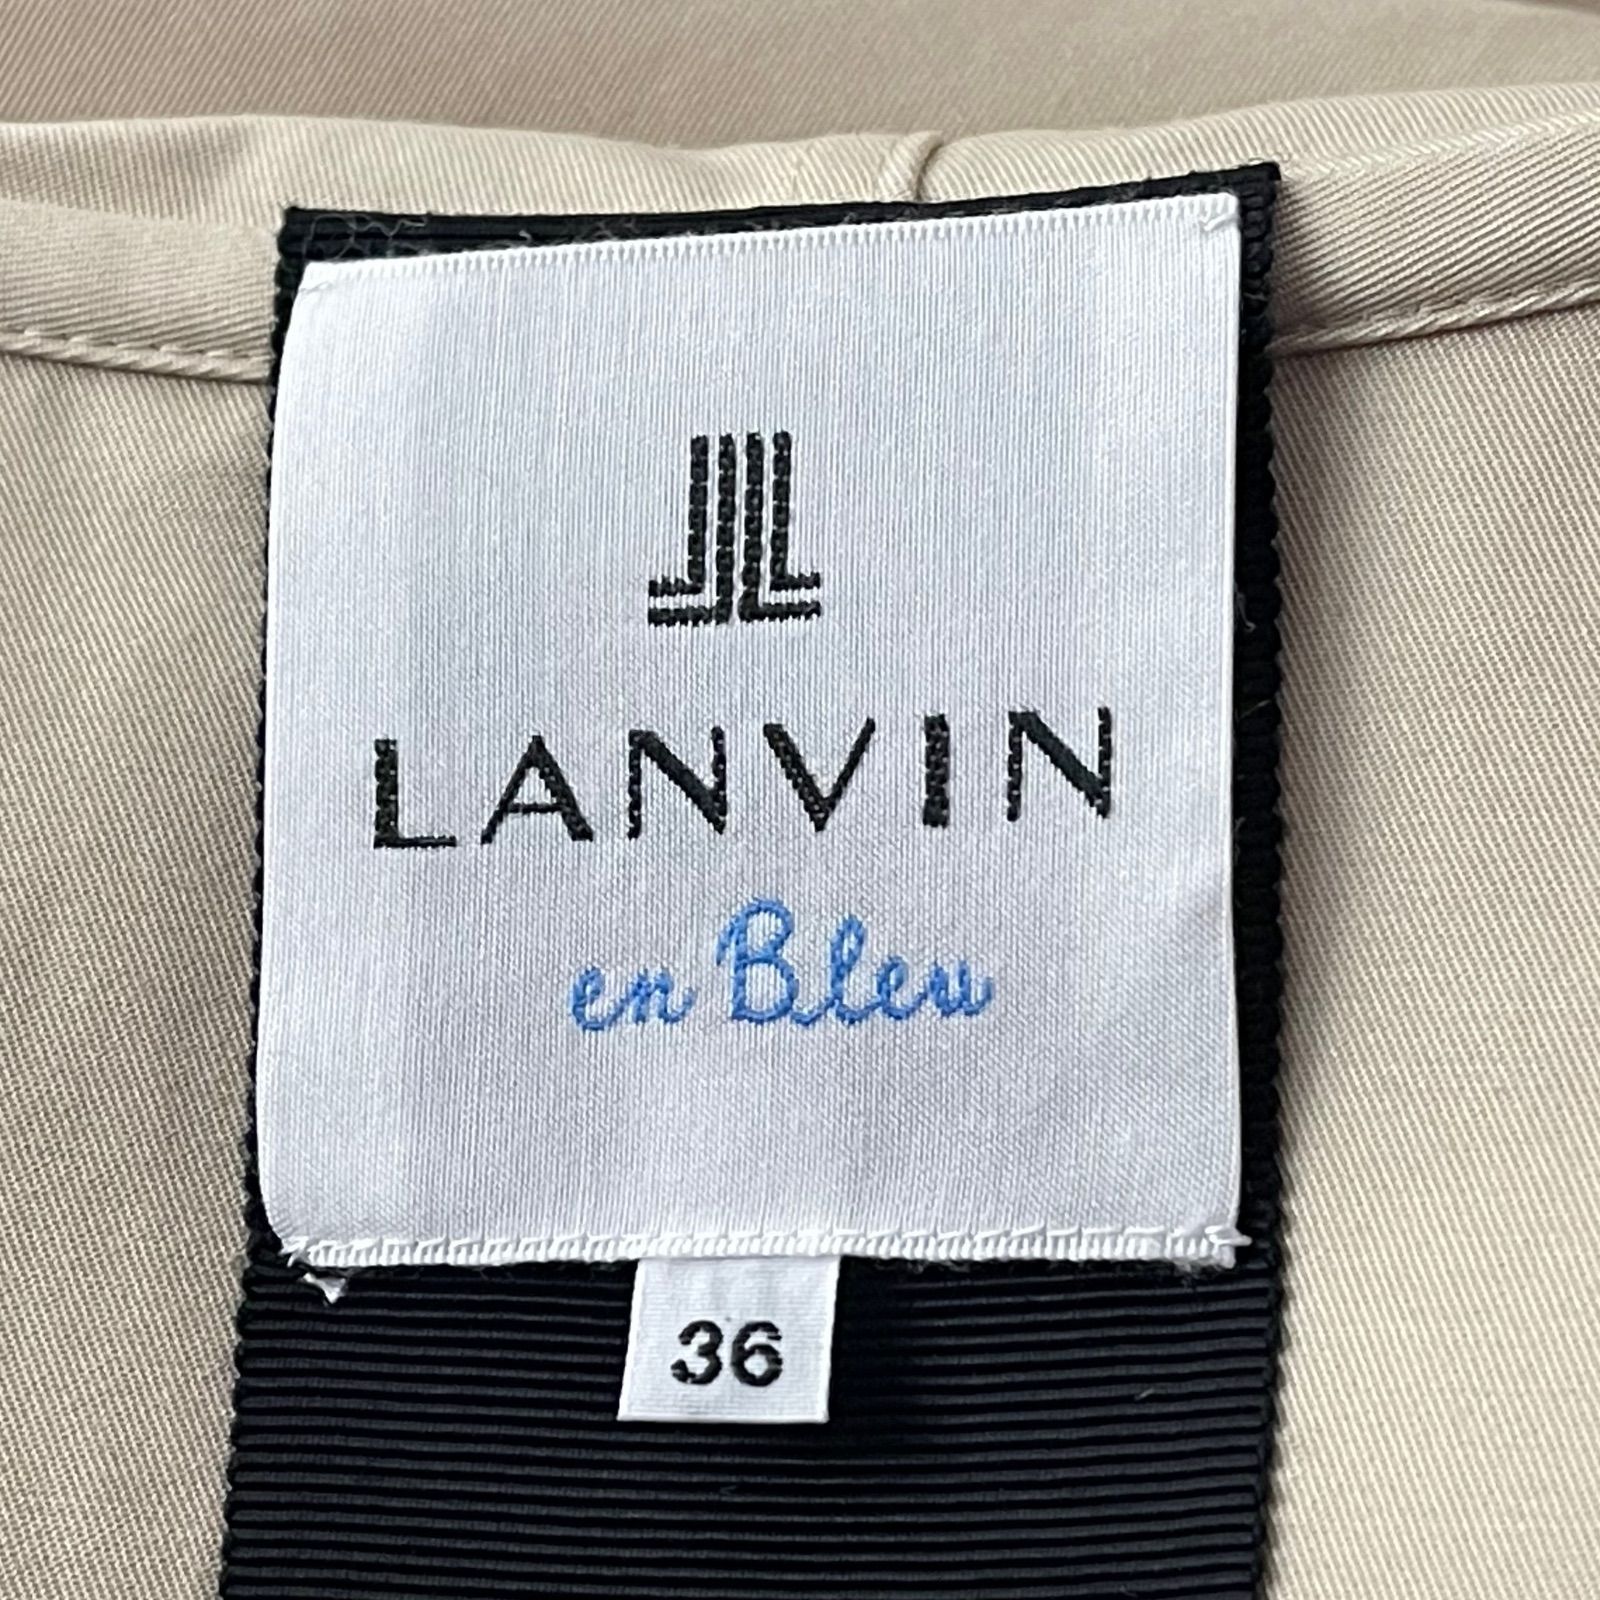 LANVIN en Bleu ランバン 裾切替フードコート サンドベージュ - メルカリ